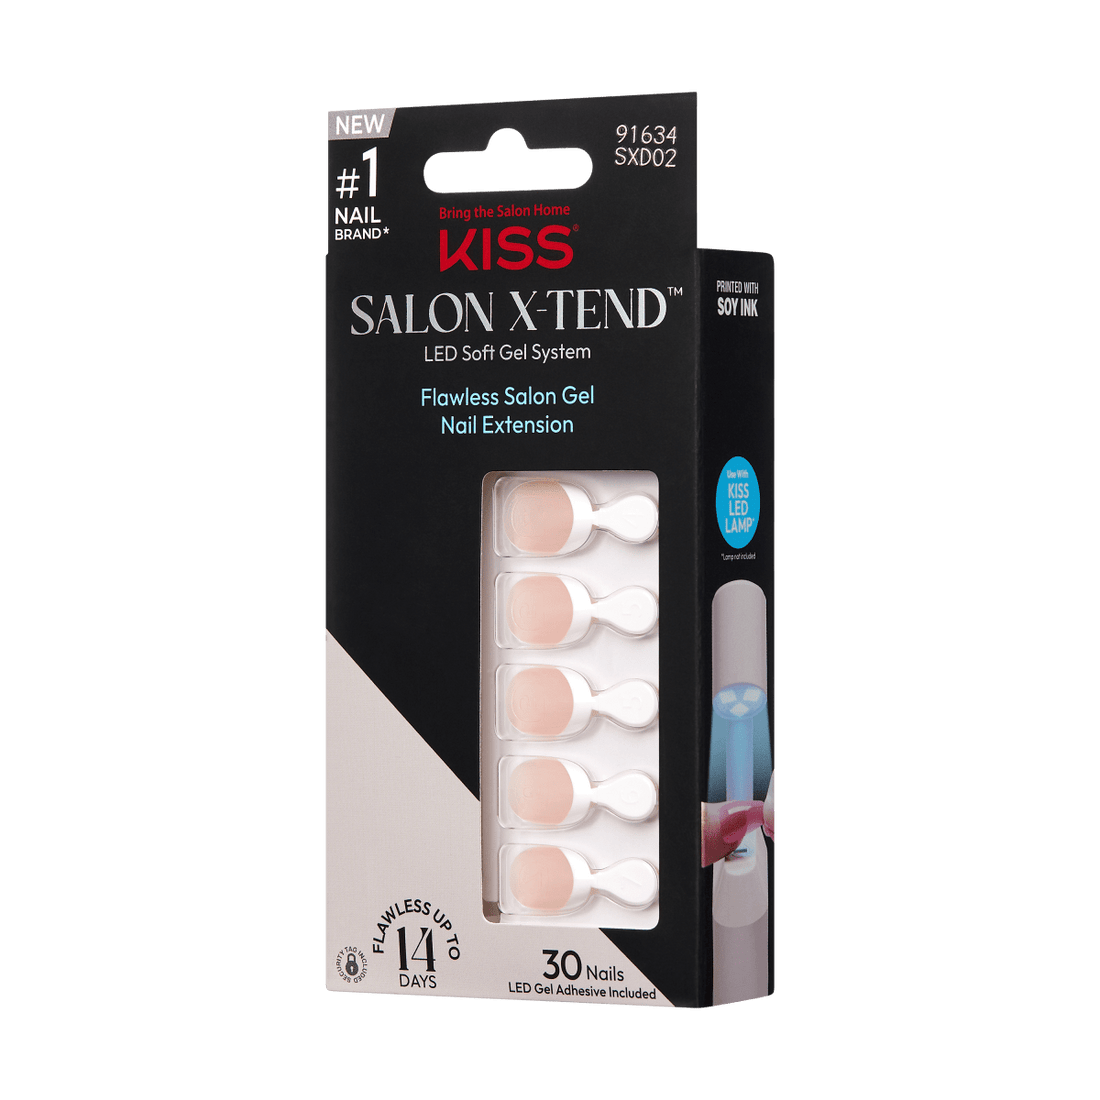 KISS Salon X-tend, Press-On Nails, Nonsense, White, Short Almond, 30ct